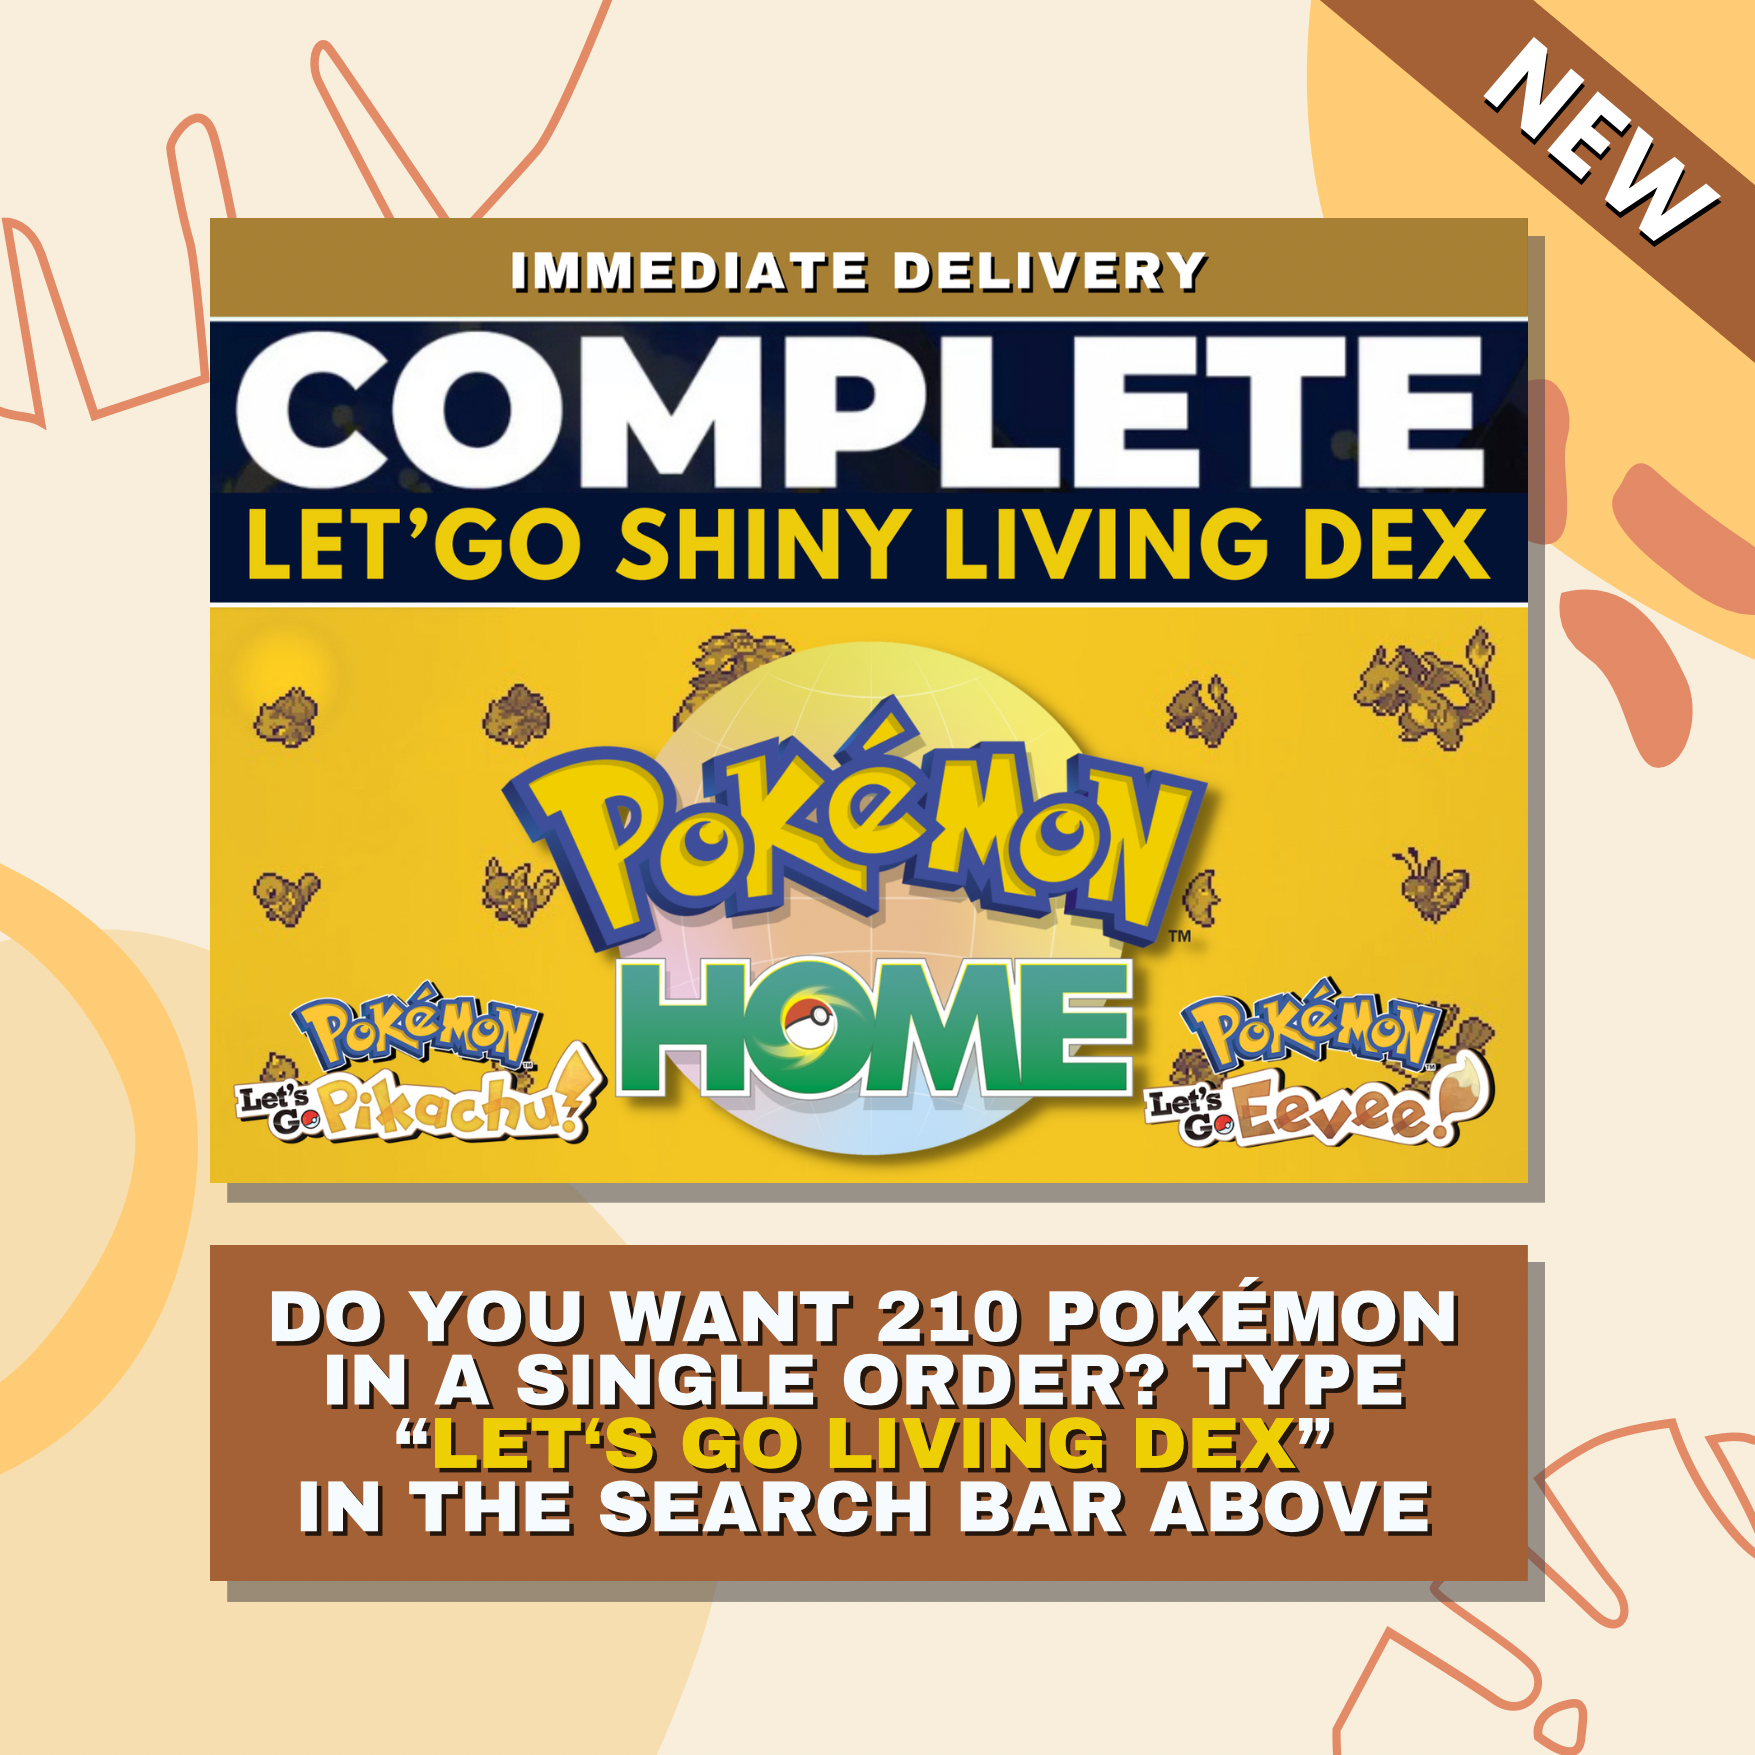 Meowth Alolan Shiny ✨ or Non Shiny Pokémon Let's Go Pikachu Eevee Level 1 Legit 6 IV 100% Legal from GO Park Customizable Custom OT by Shiny Living Dex | Shiny Living Dex